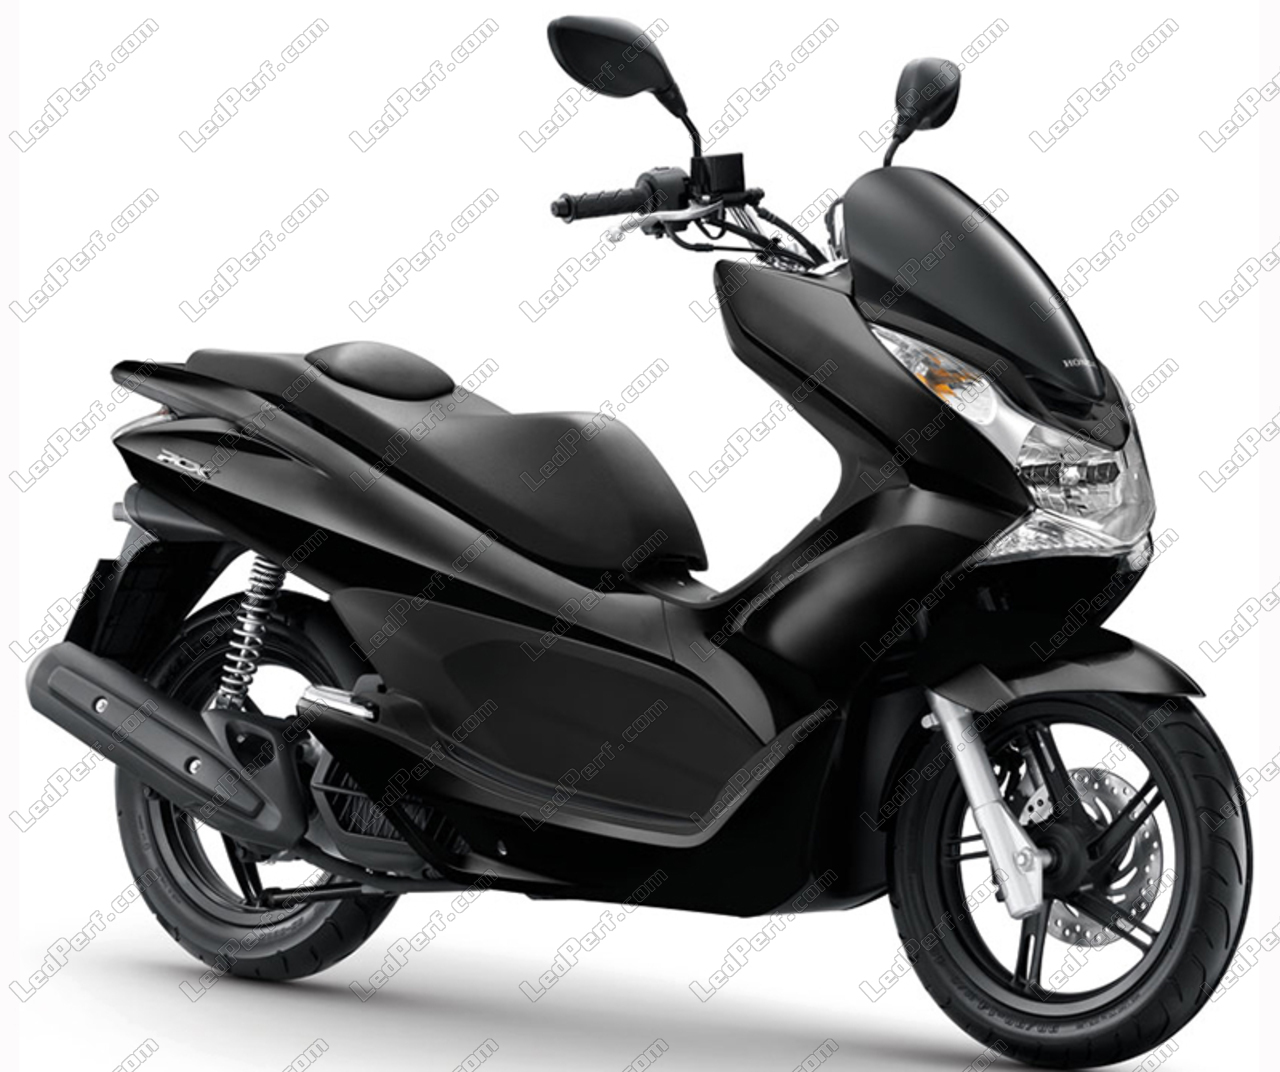 Скутер Honda PCX 150. Honda 150 cc Scooter. Honda PCX 125 2021. Honda PCX 125 Black. Скутер хонда отзывы